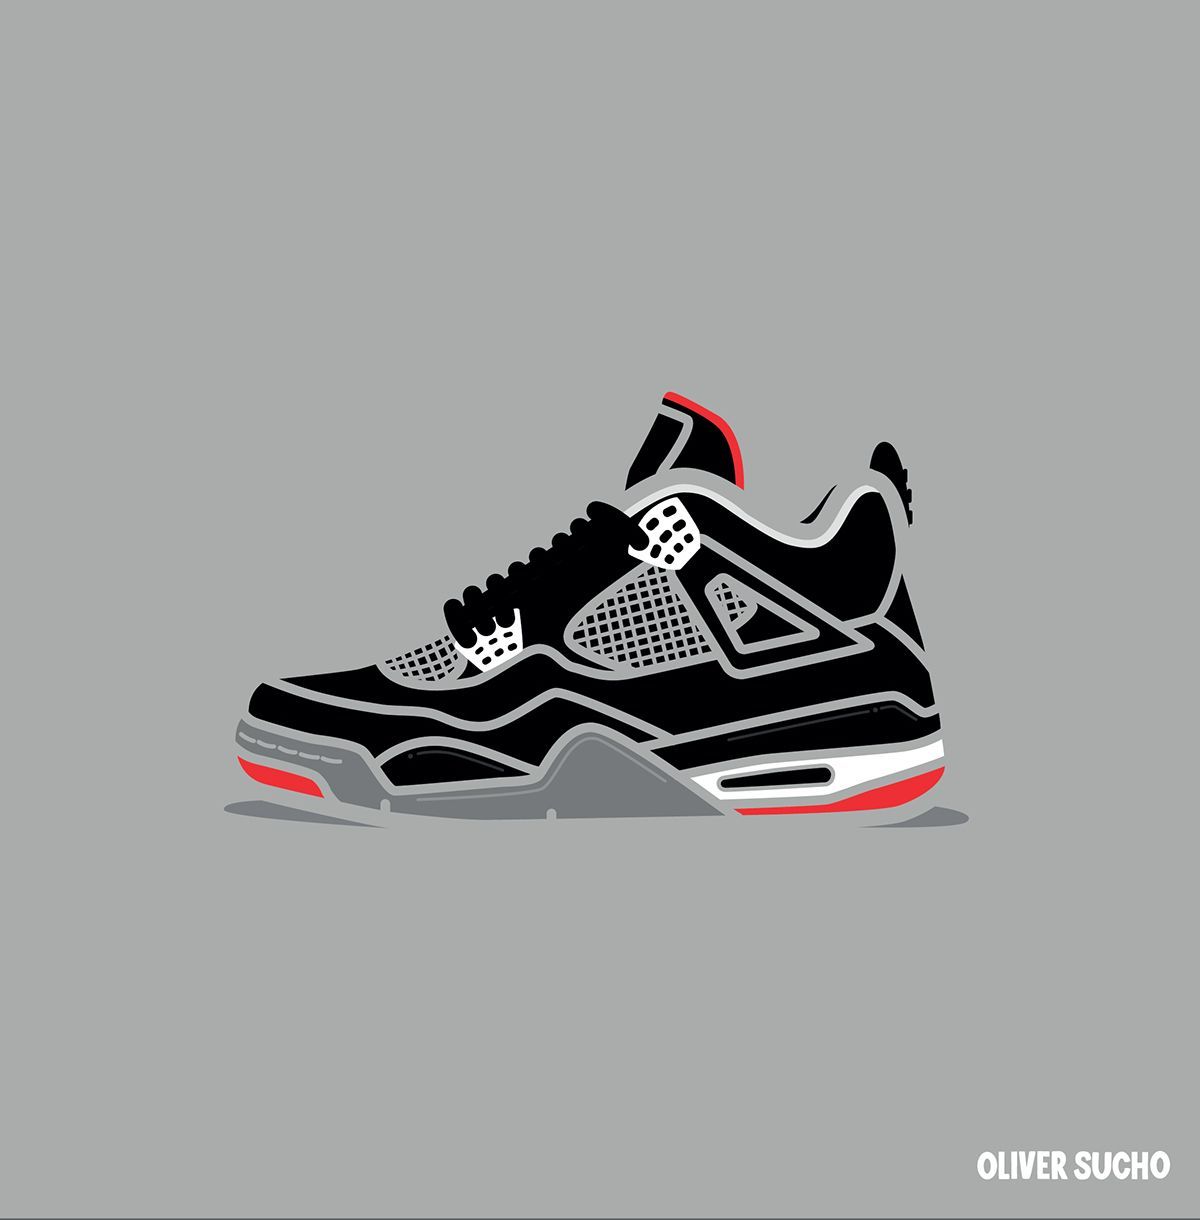 Air Jordan 4 Minimal Illustration Series. Sneakers illustration